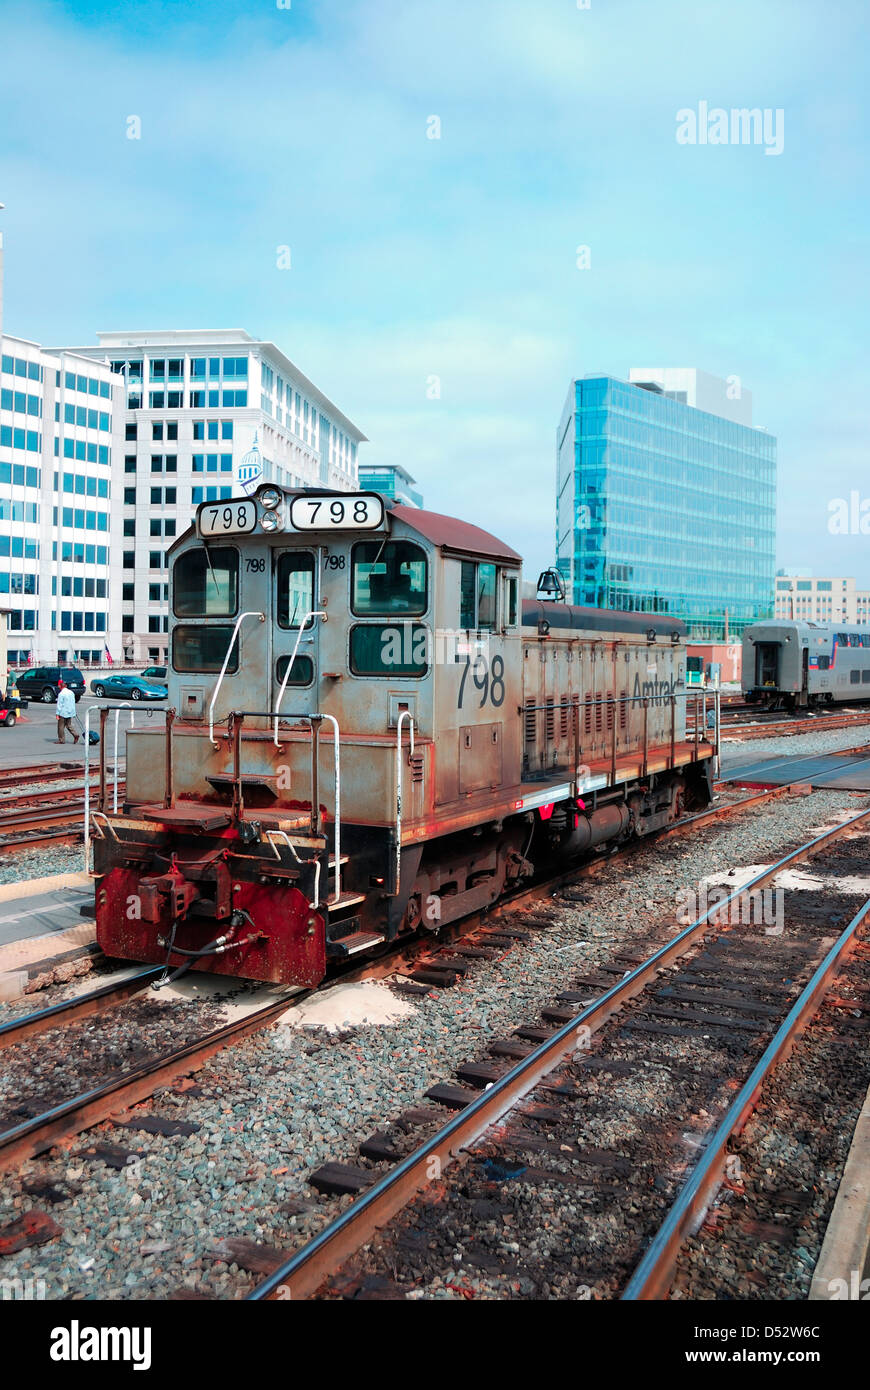 Old locomotive at train station Stock Photo